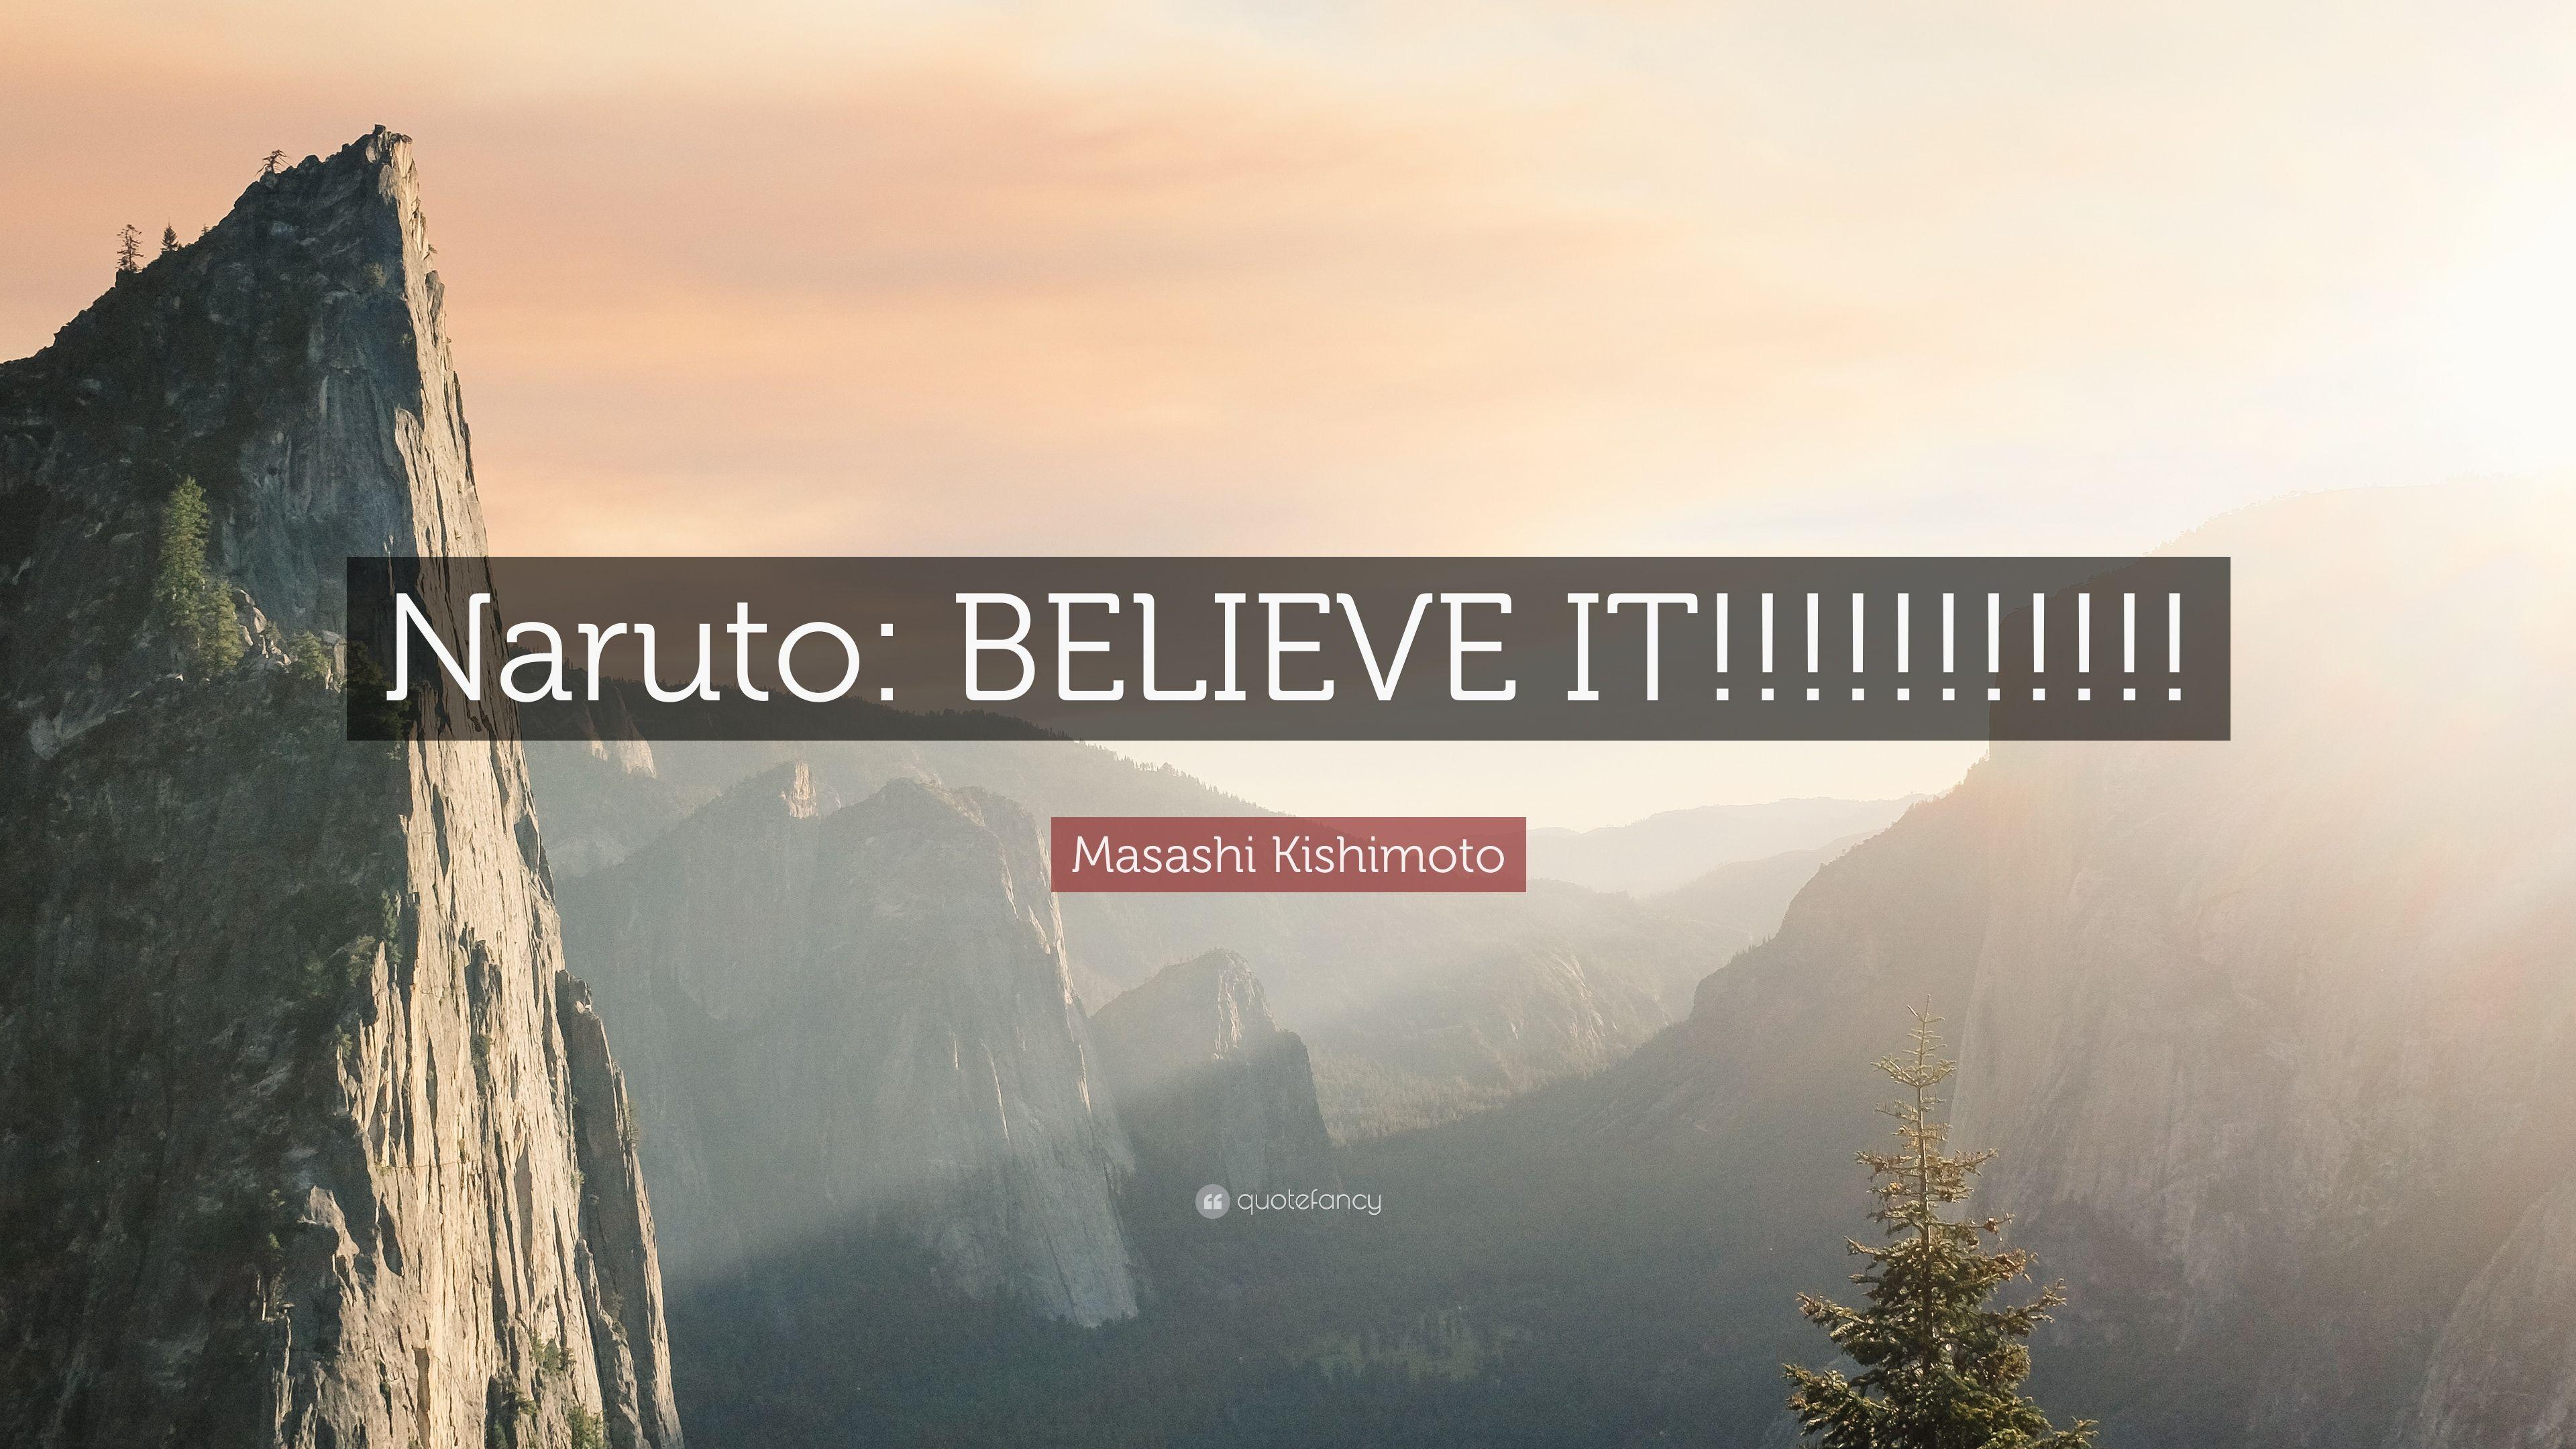 Masashi Kishimoto Quote: “Naruto: BELIEVE IT!!!!!!!!!!!” (12 wallpaper)